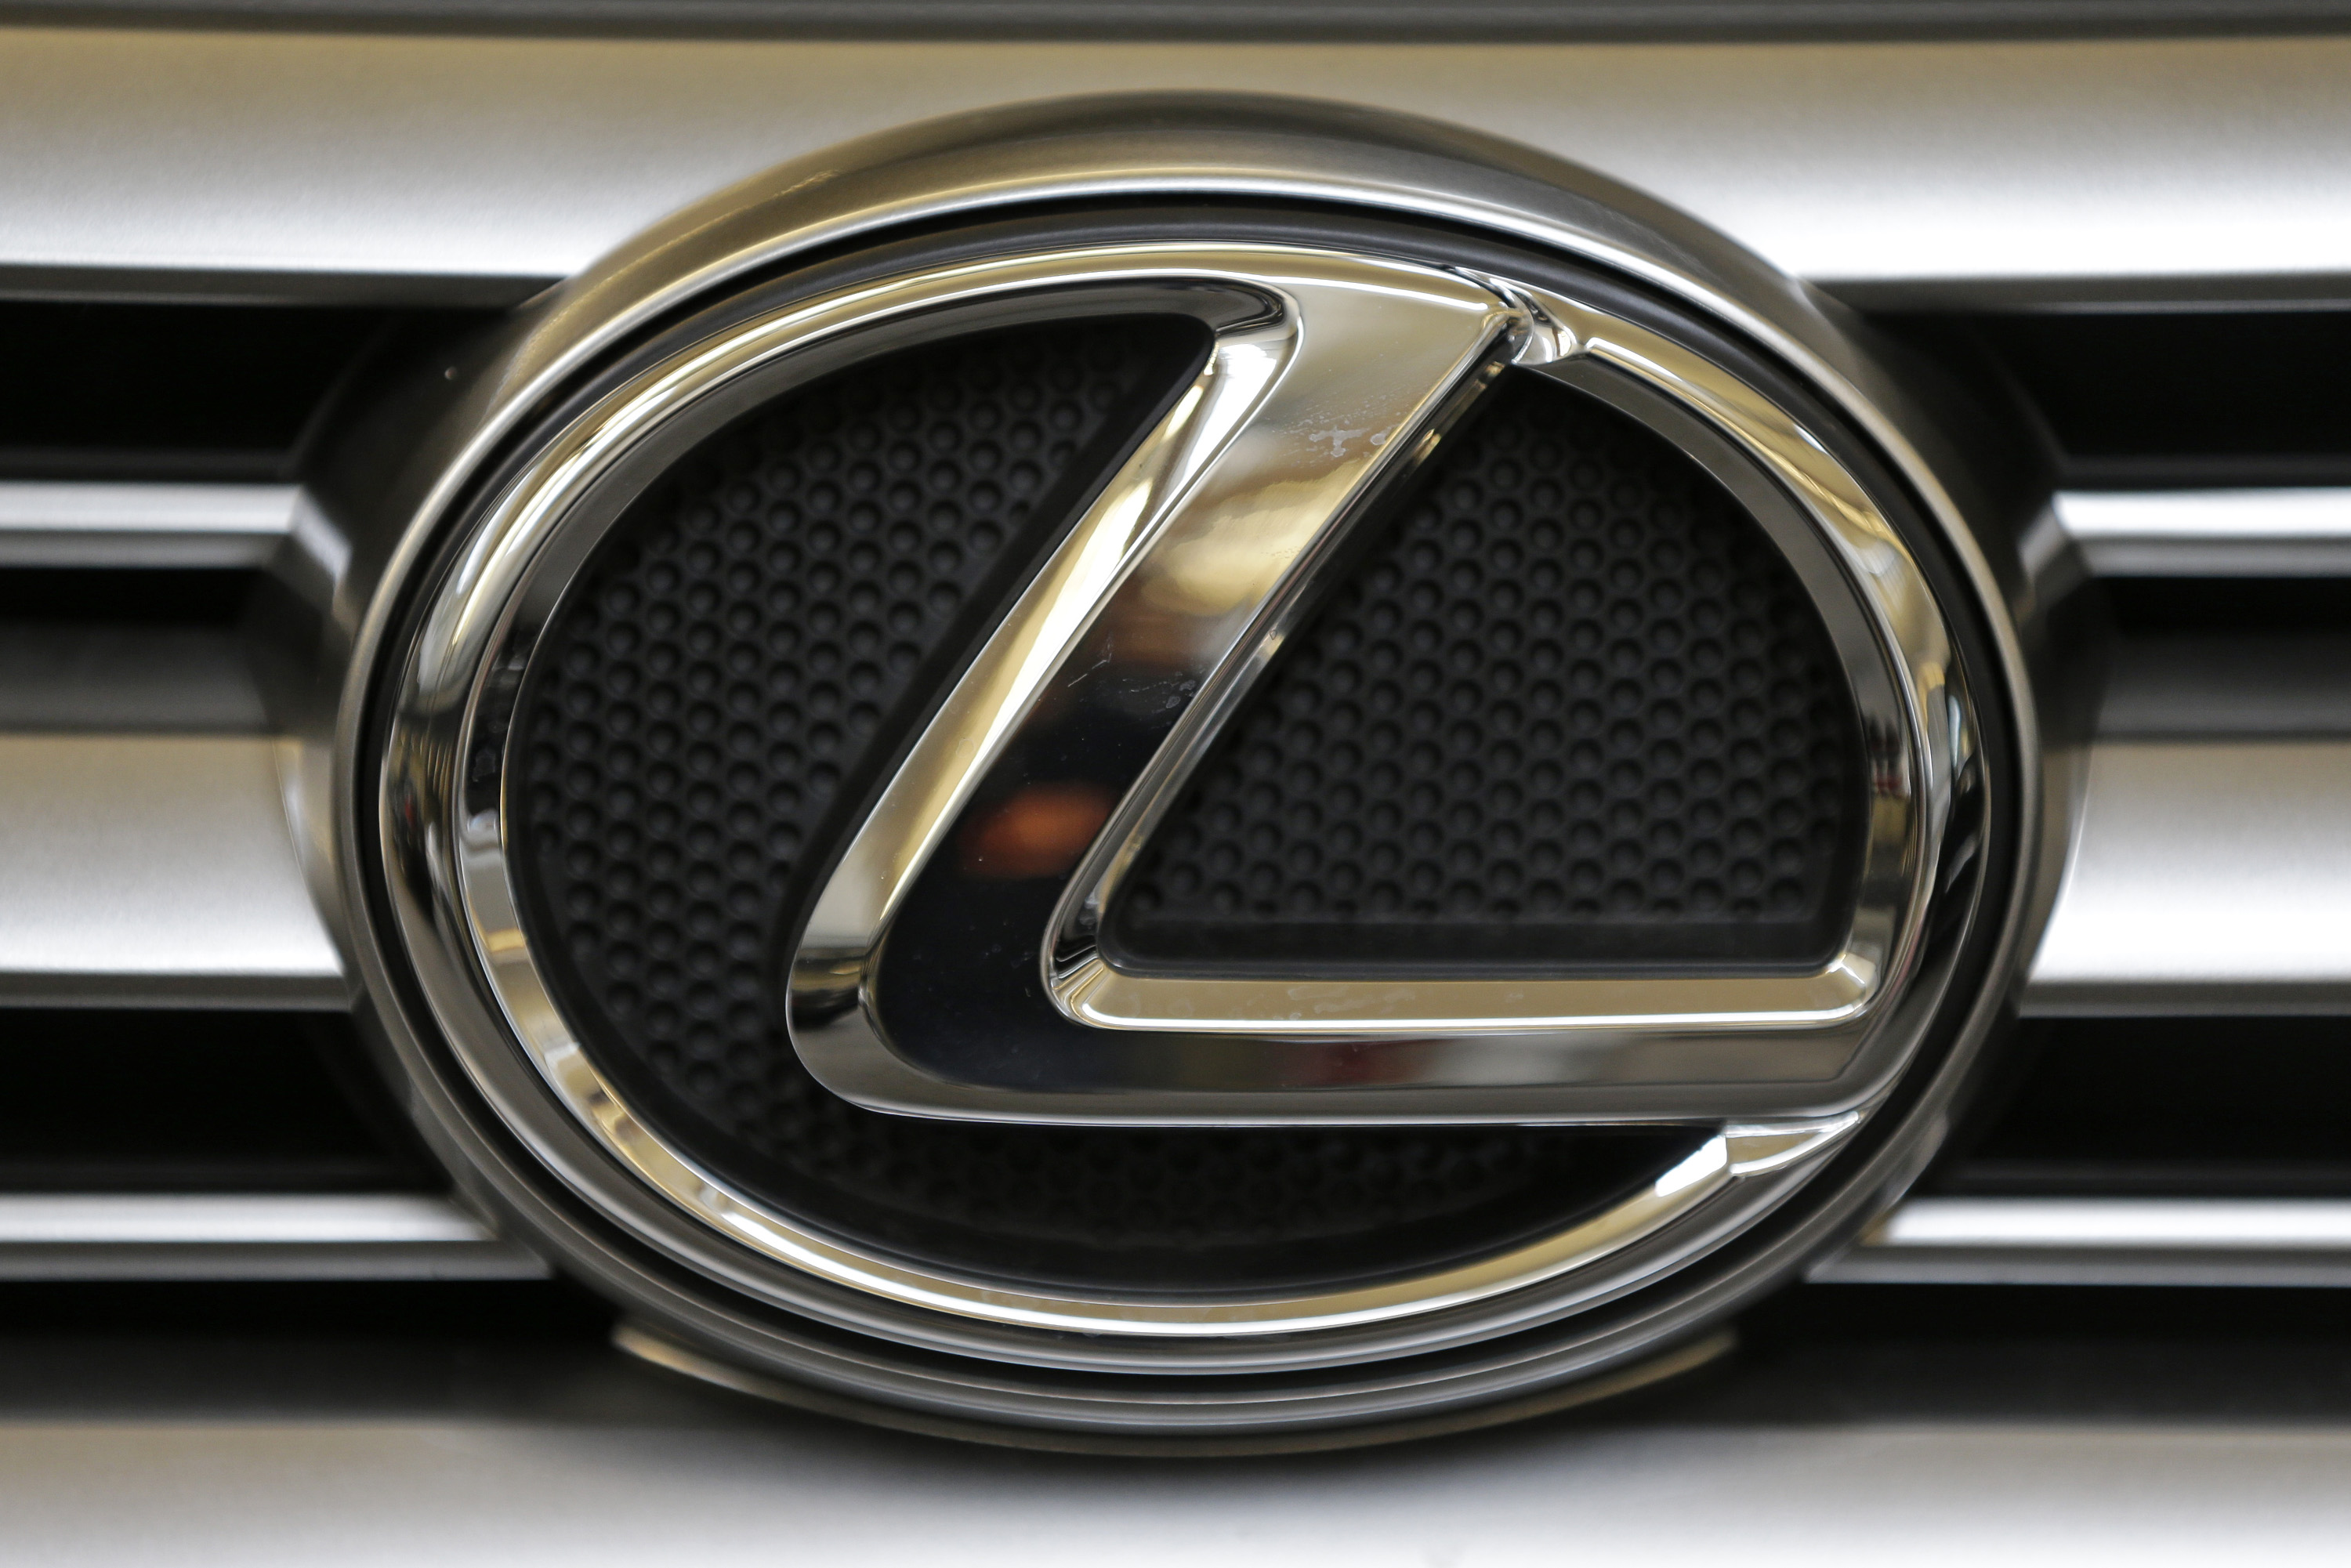 Lexus Logo Wallpaper Pictures Image